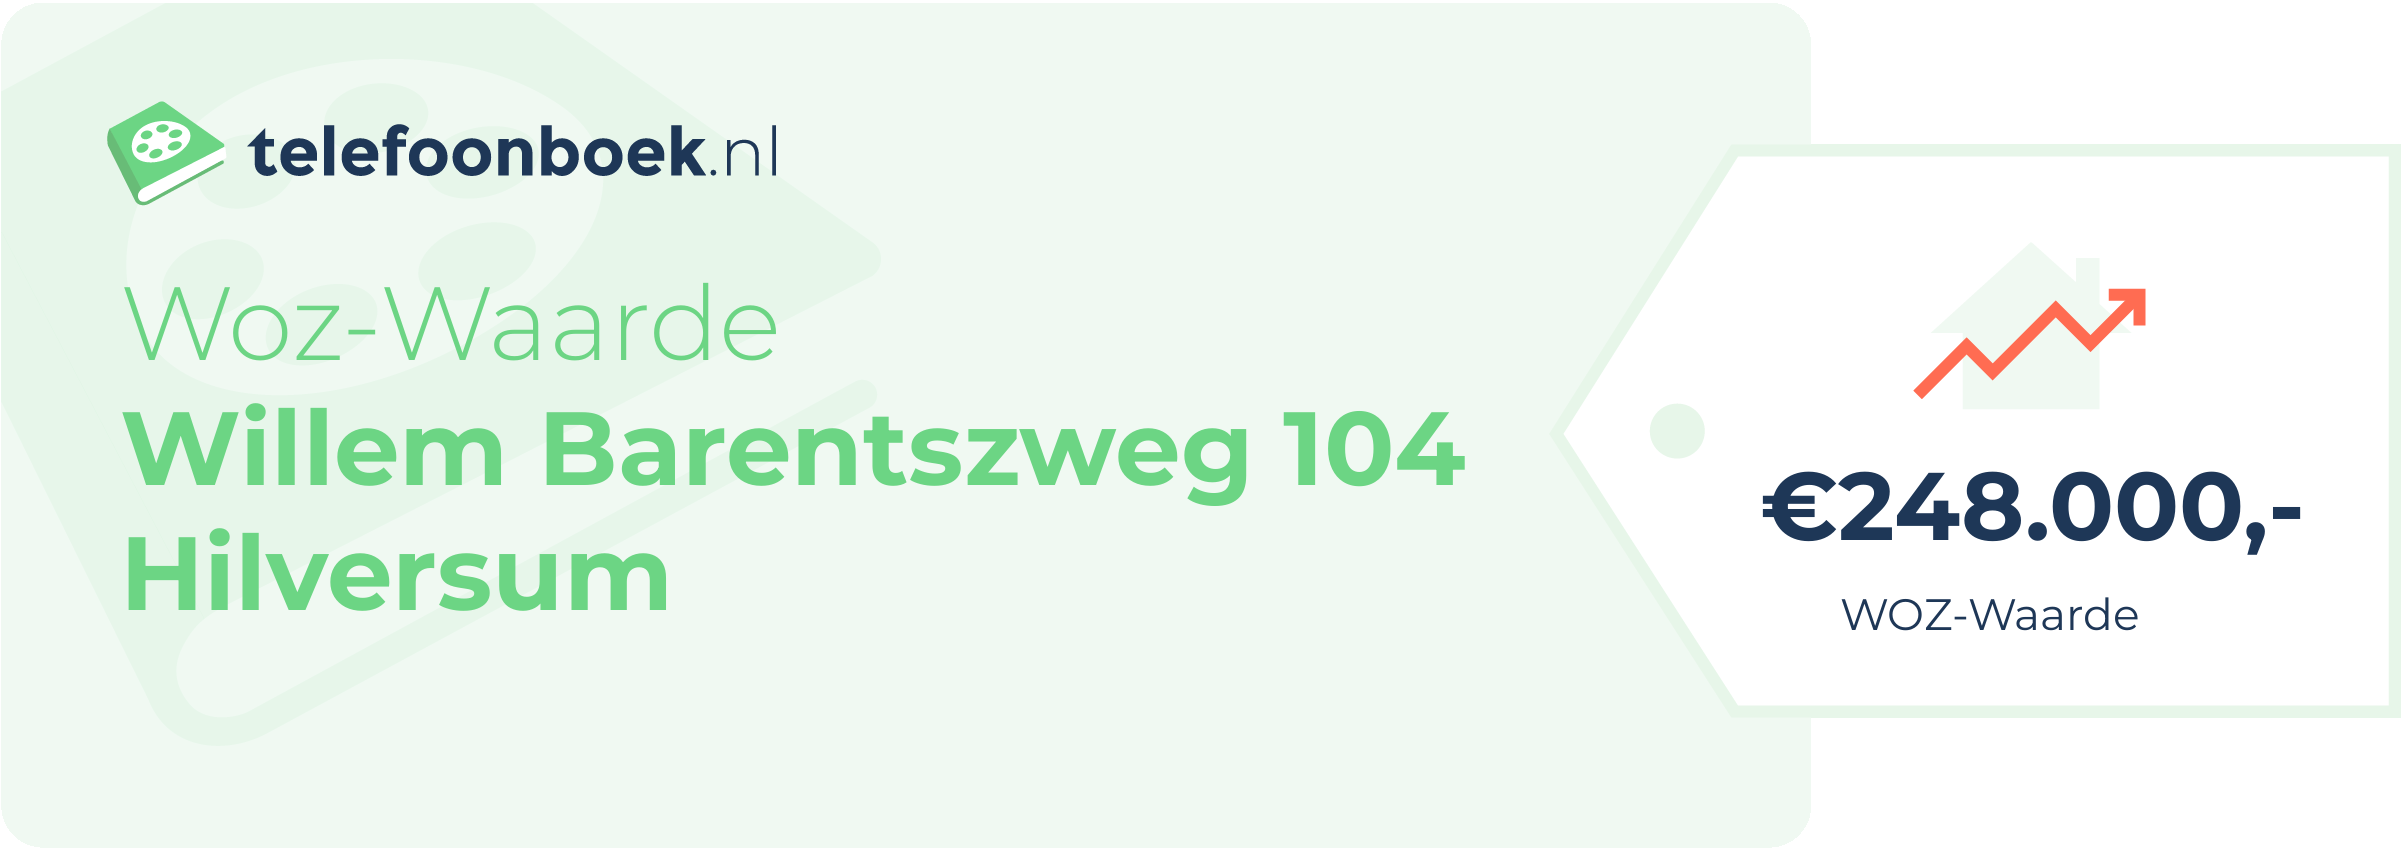 WOZ-waarde Willem Barentszweg 104 Hilversum